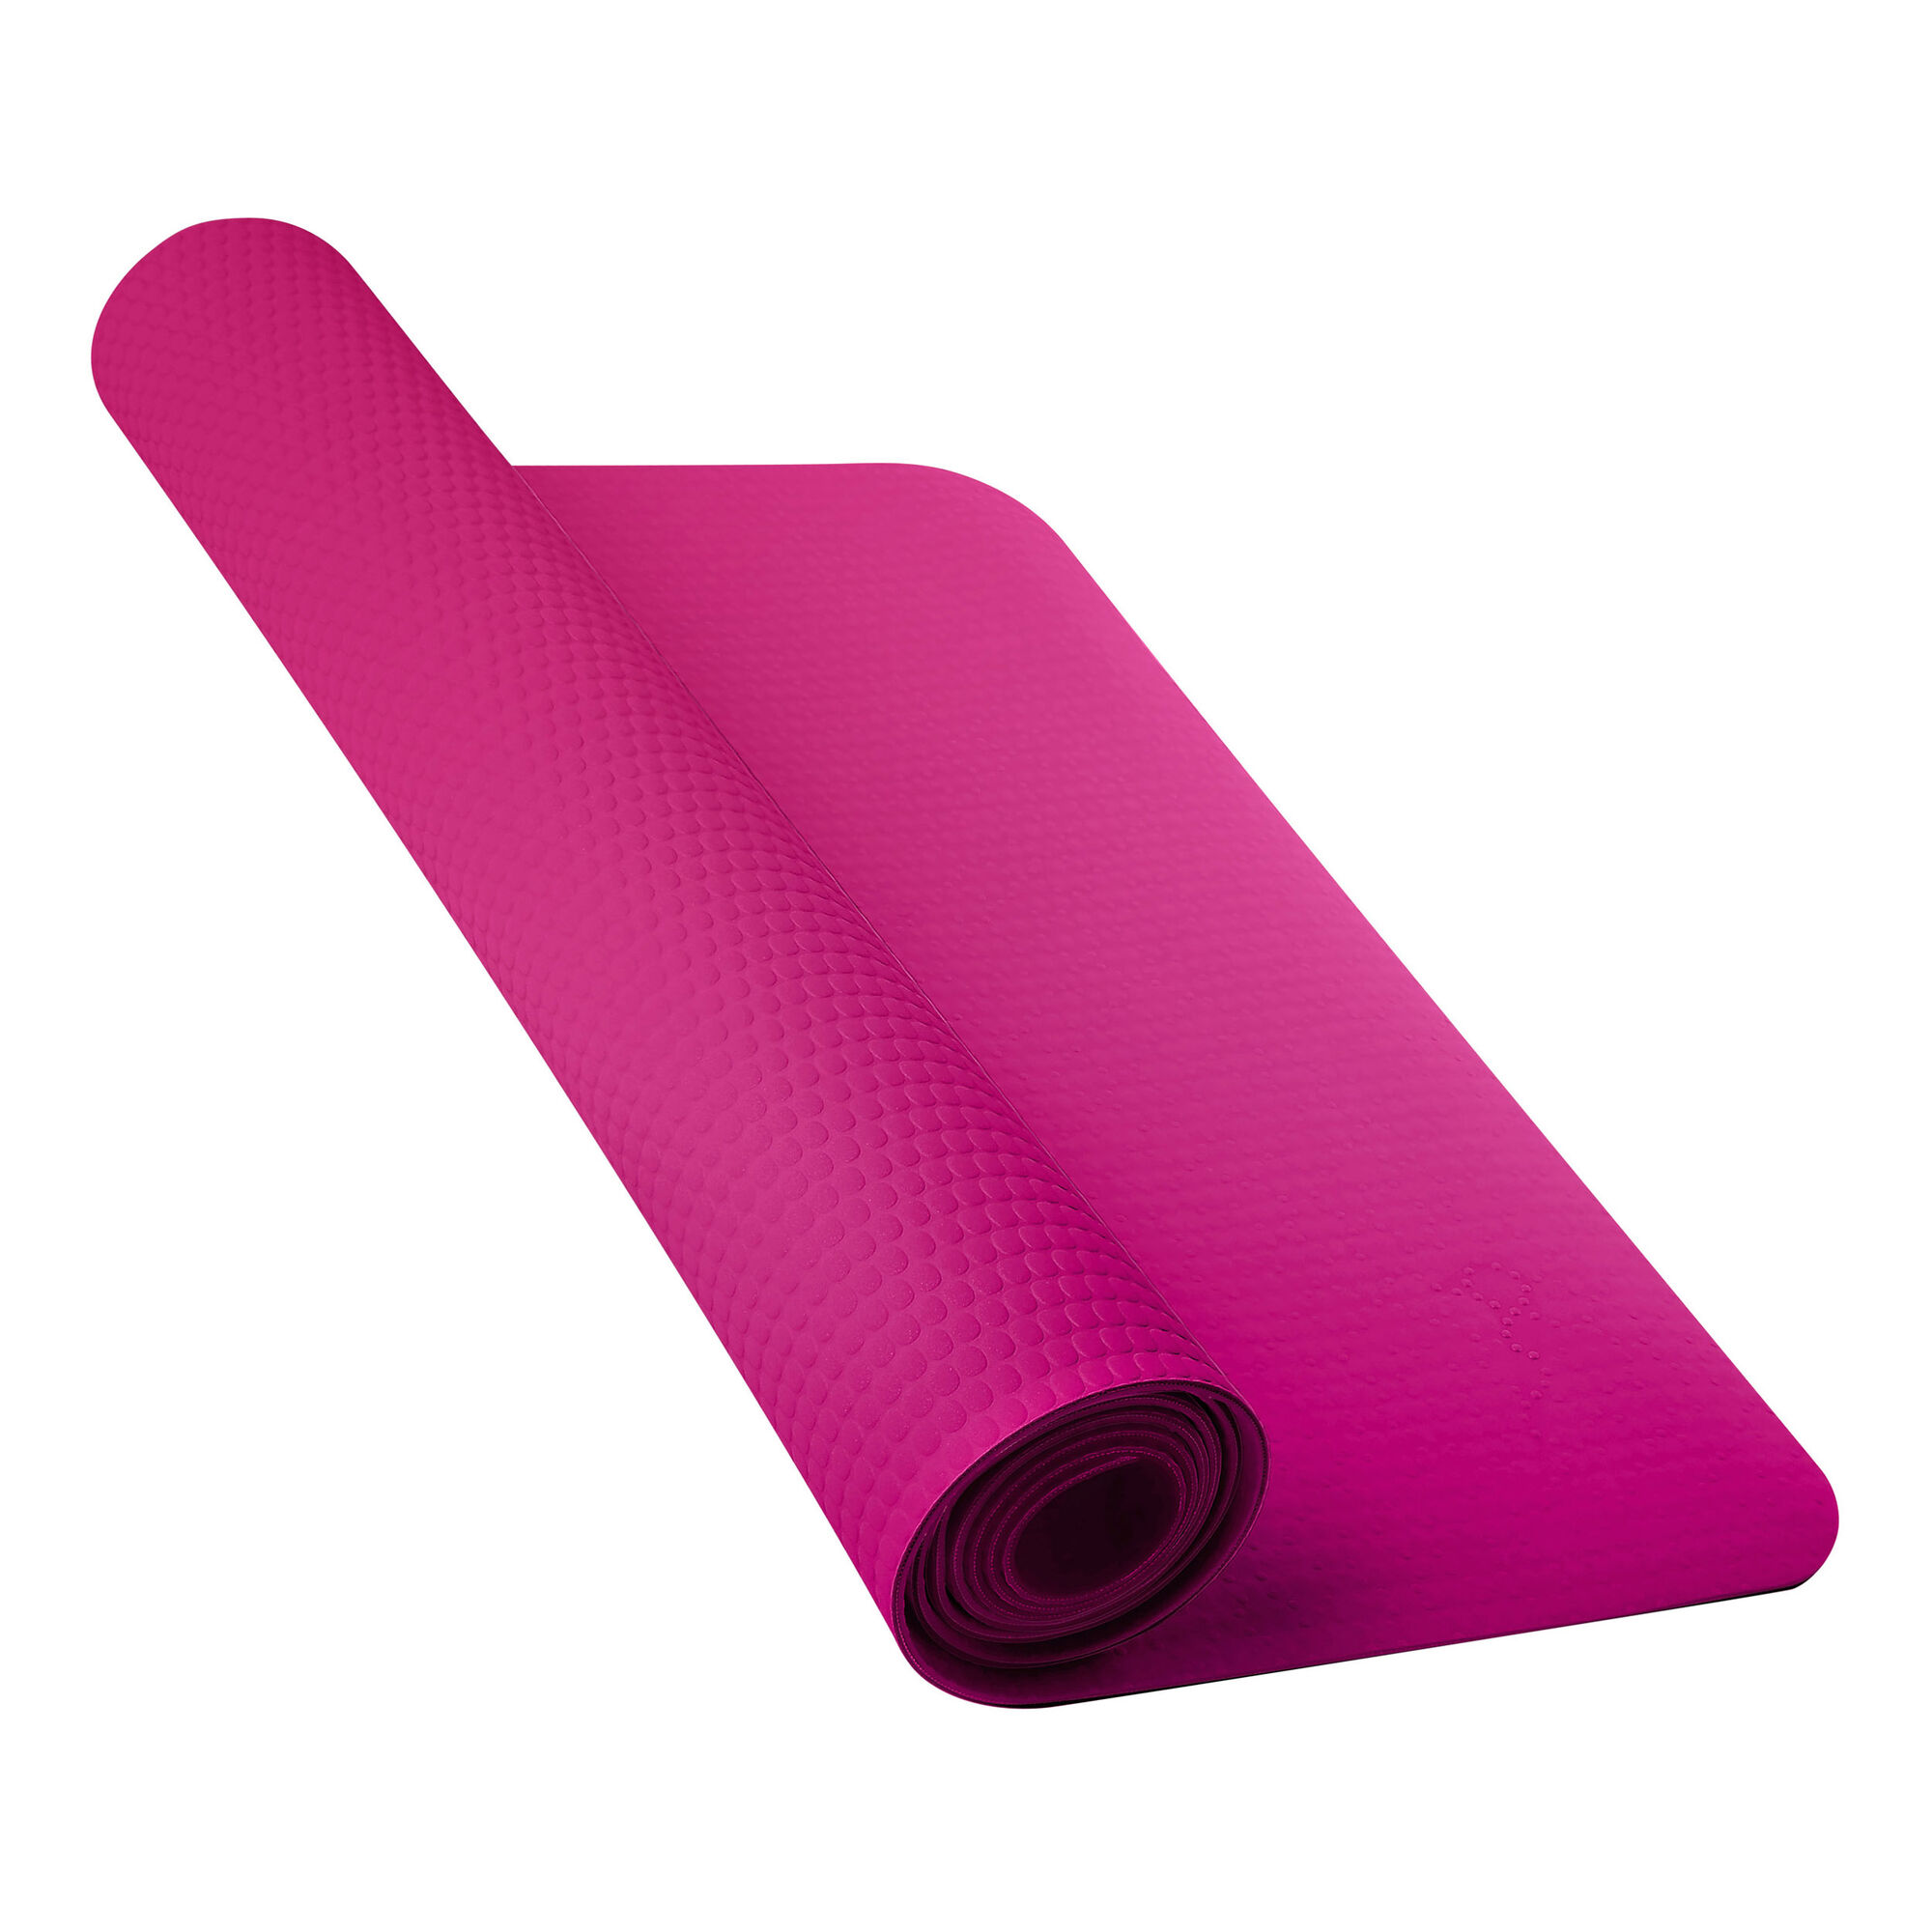 buy Nike Yoga Mat Pink online JoggingPoint